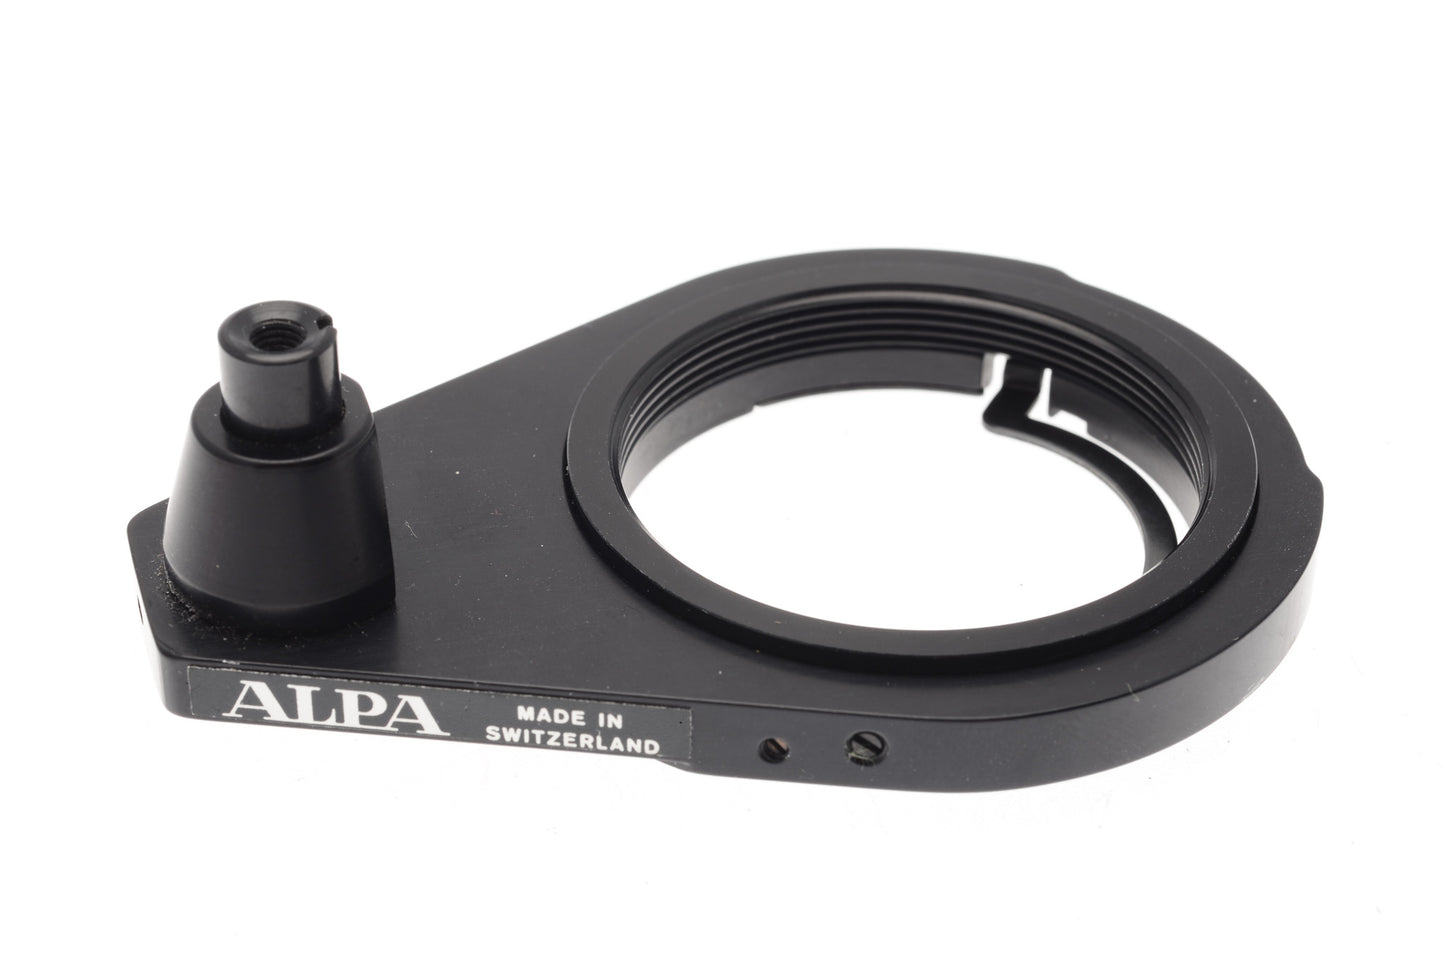 Alpa Autobag M42 Auto Lens Adapter - Lens Adapter